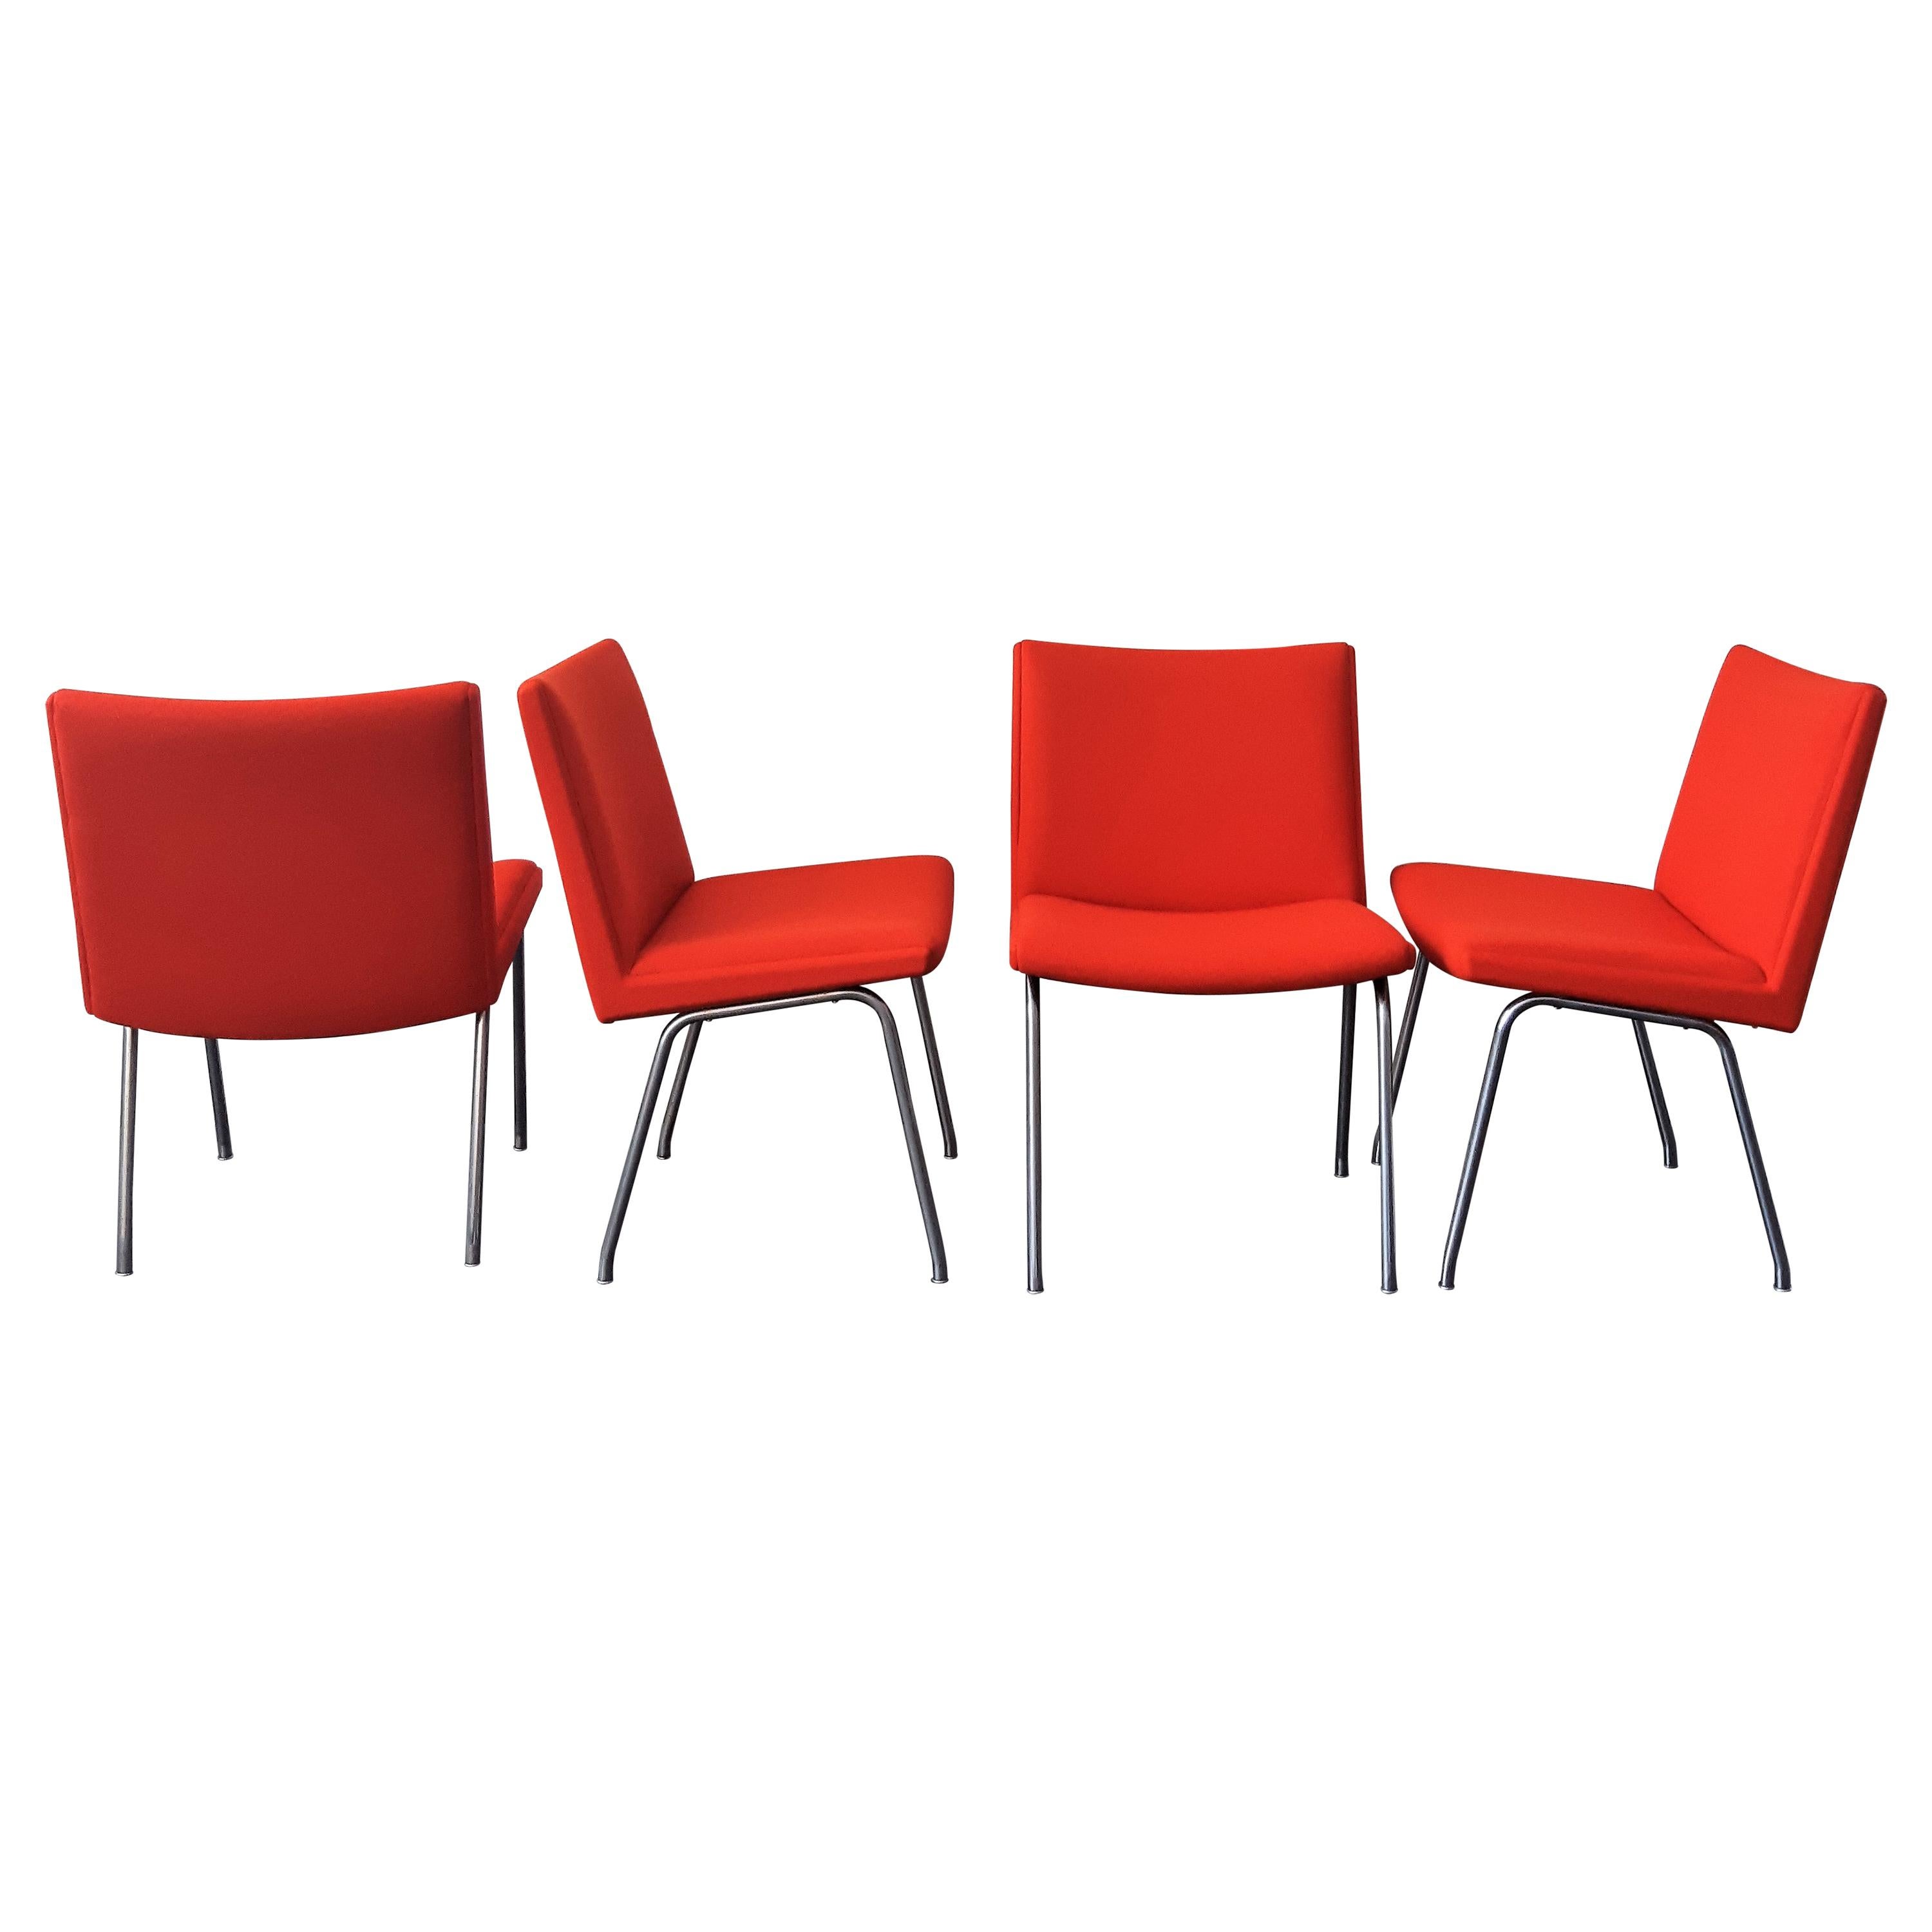 Set of 4 Model Airport Dining Chairs by Hans Wegner for AP Stolen, Denmark